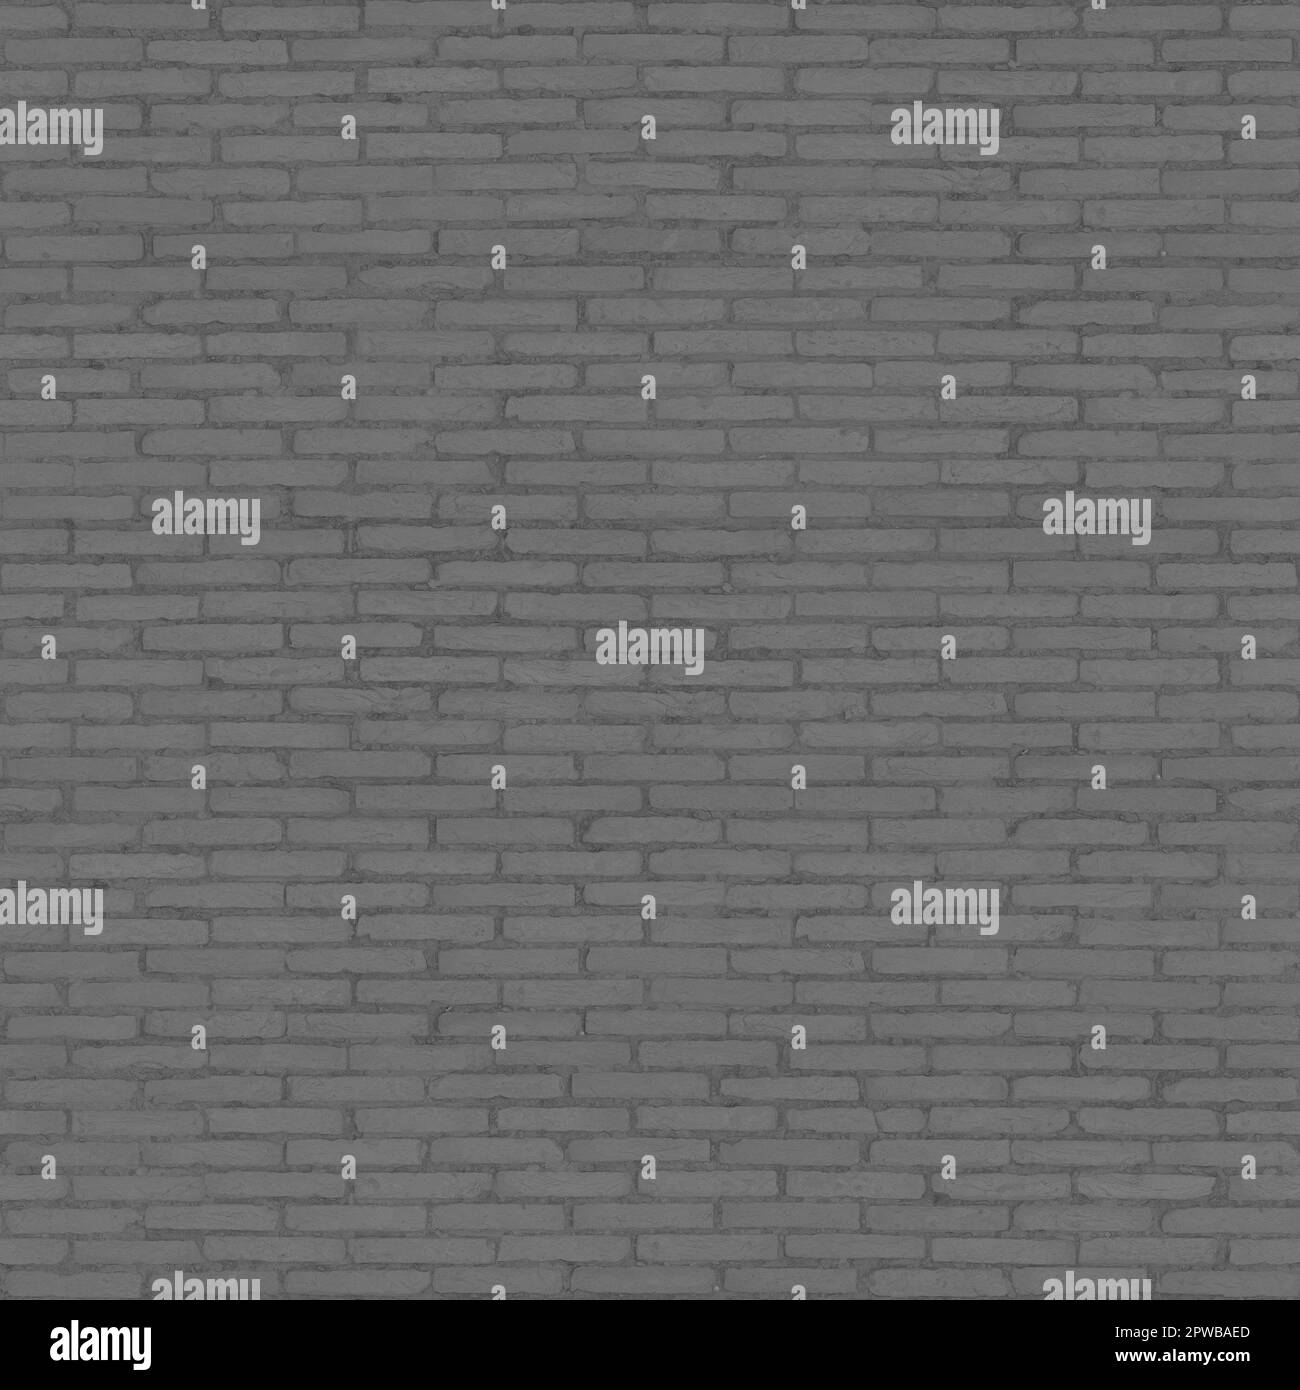 Bump texture old brick floor, Bump mapping brick floor Stock Photo